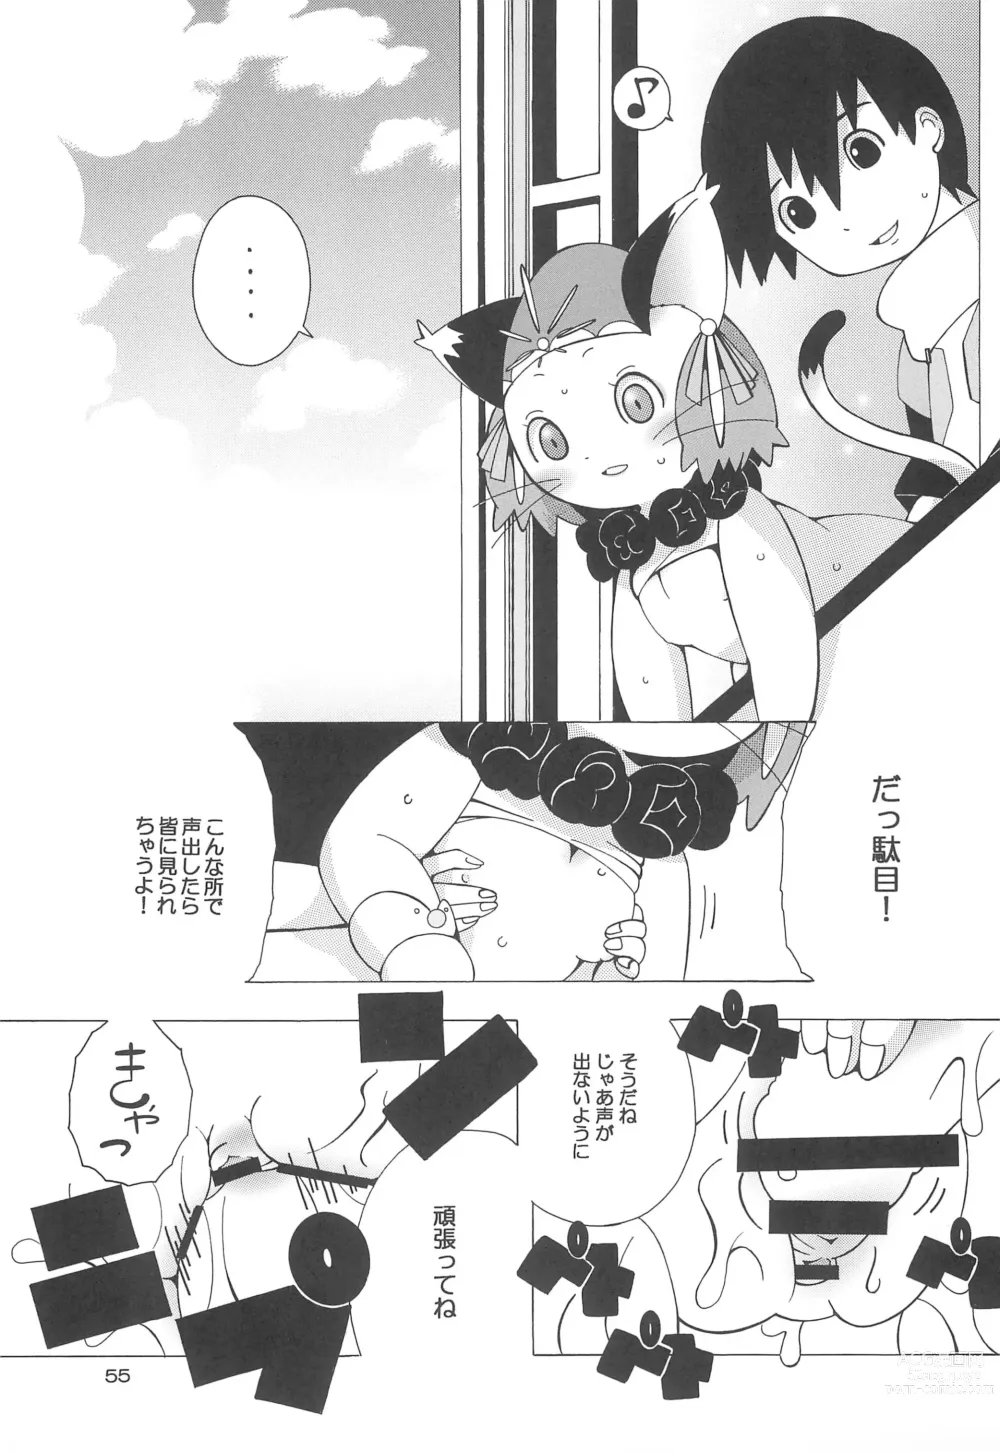 Page 55 of doujinshi Watamii!